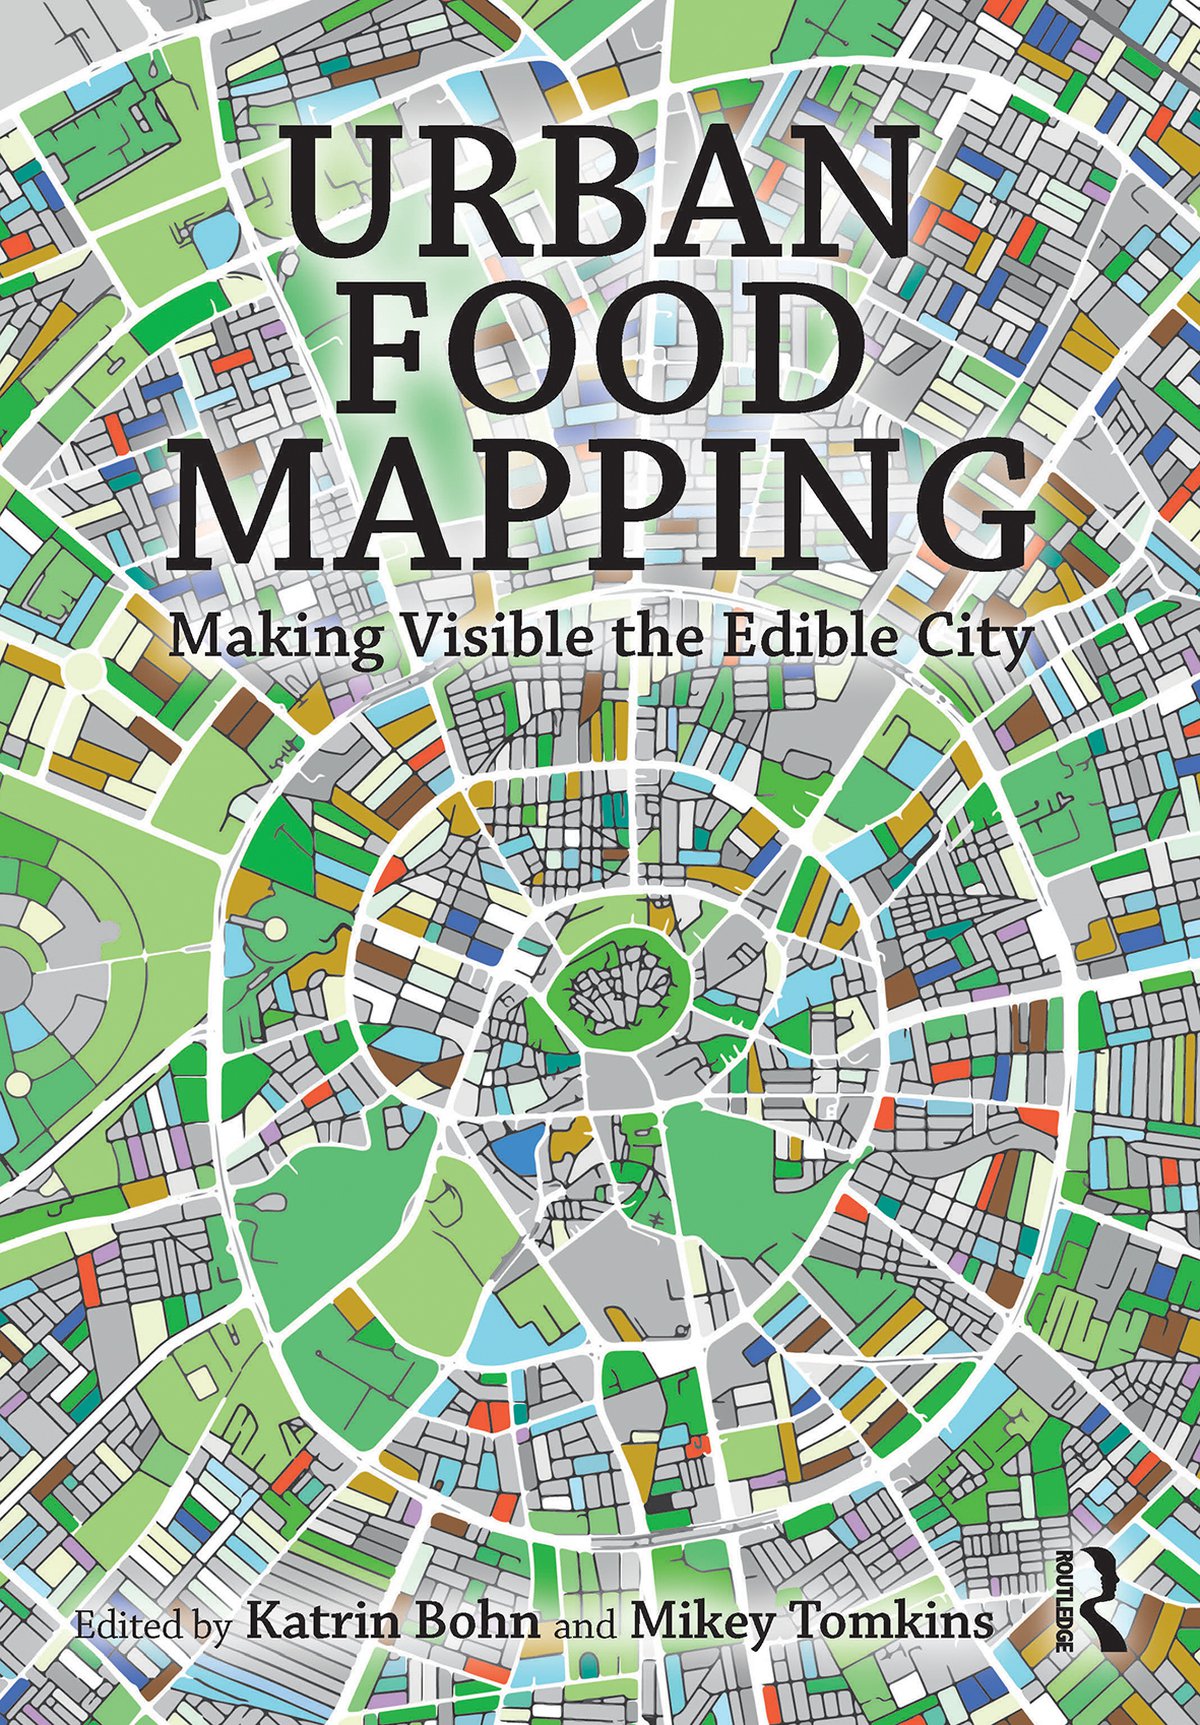 tomkins-routledge-urbanfoodmapping-cover-kl2mb-rgb-28662.jpg